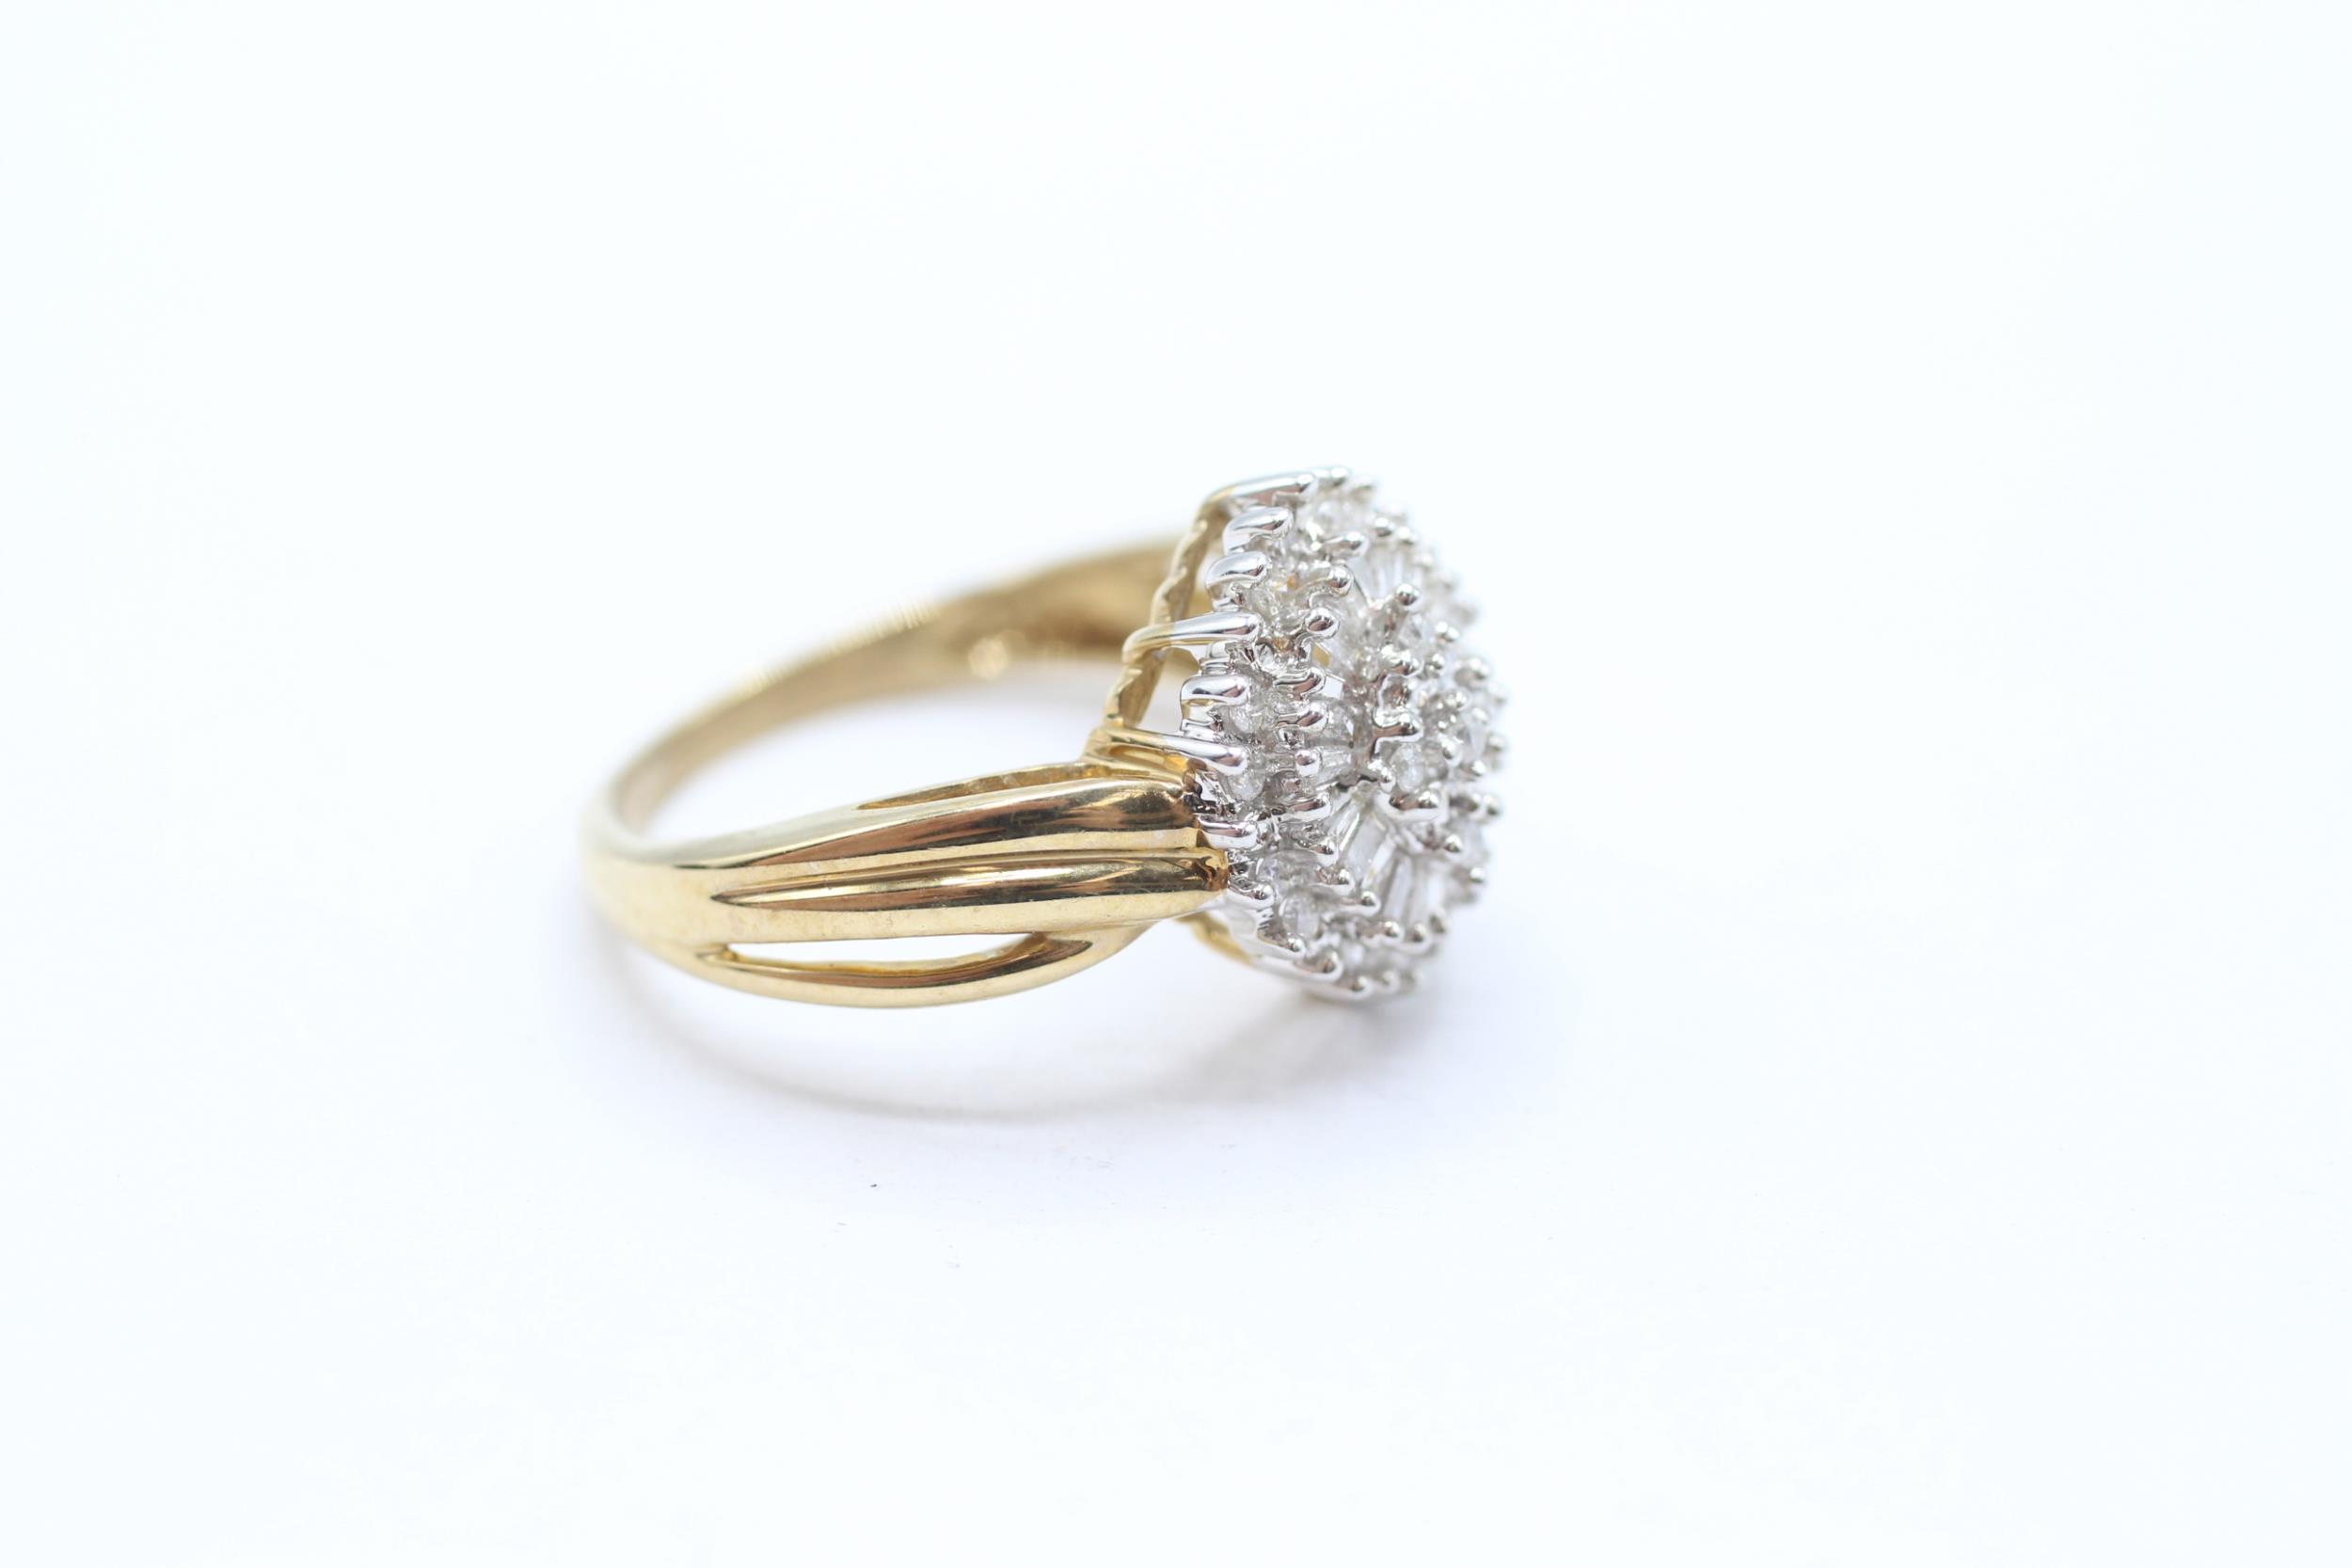 9ct gold vari-cut diamond cluster ring Size N - 3.9 g - Image 2 of 4